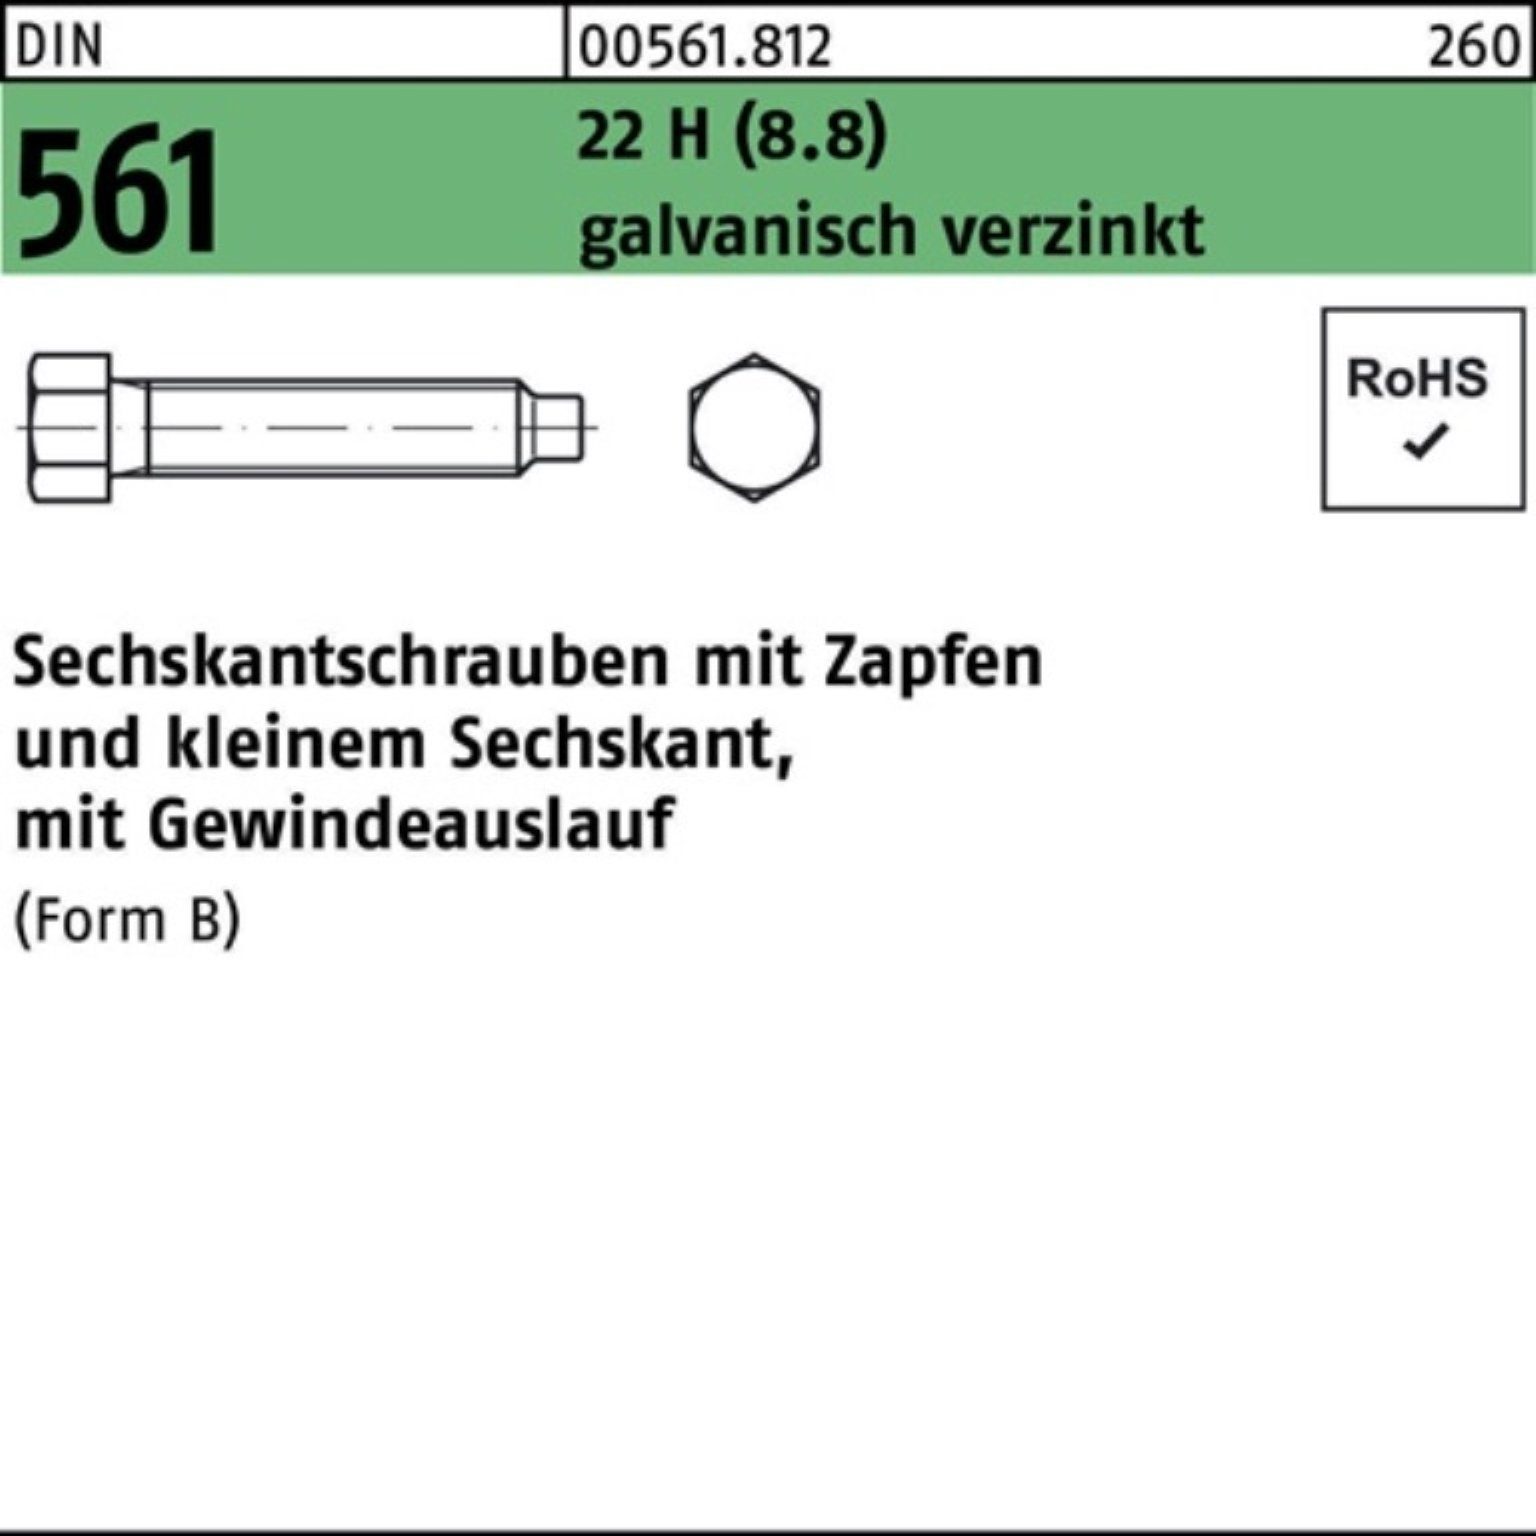 Reyher Sechskantschraube Zapfen Sechskantschraube 561 DIN (8.8) 100er Pack 22 BM 16x70 galv.v H